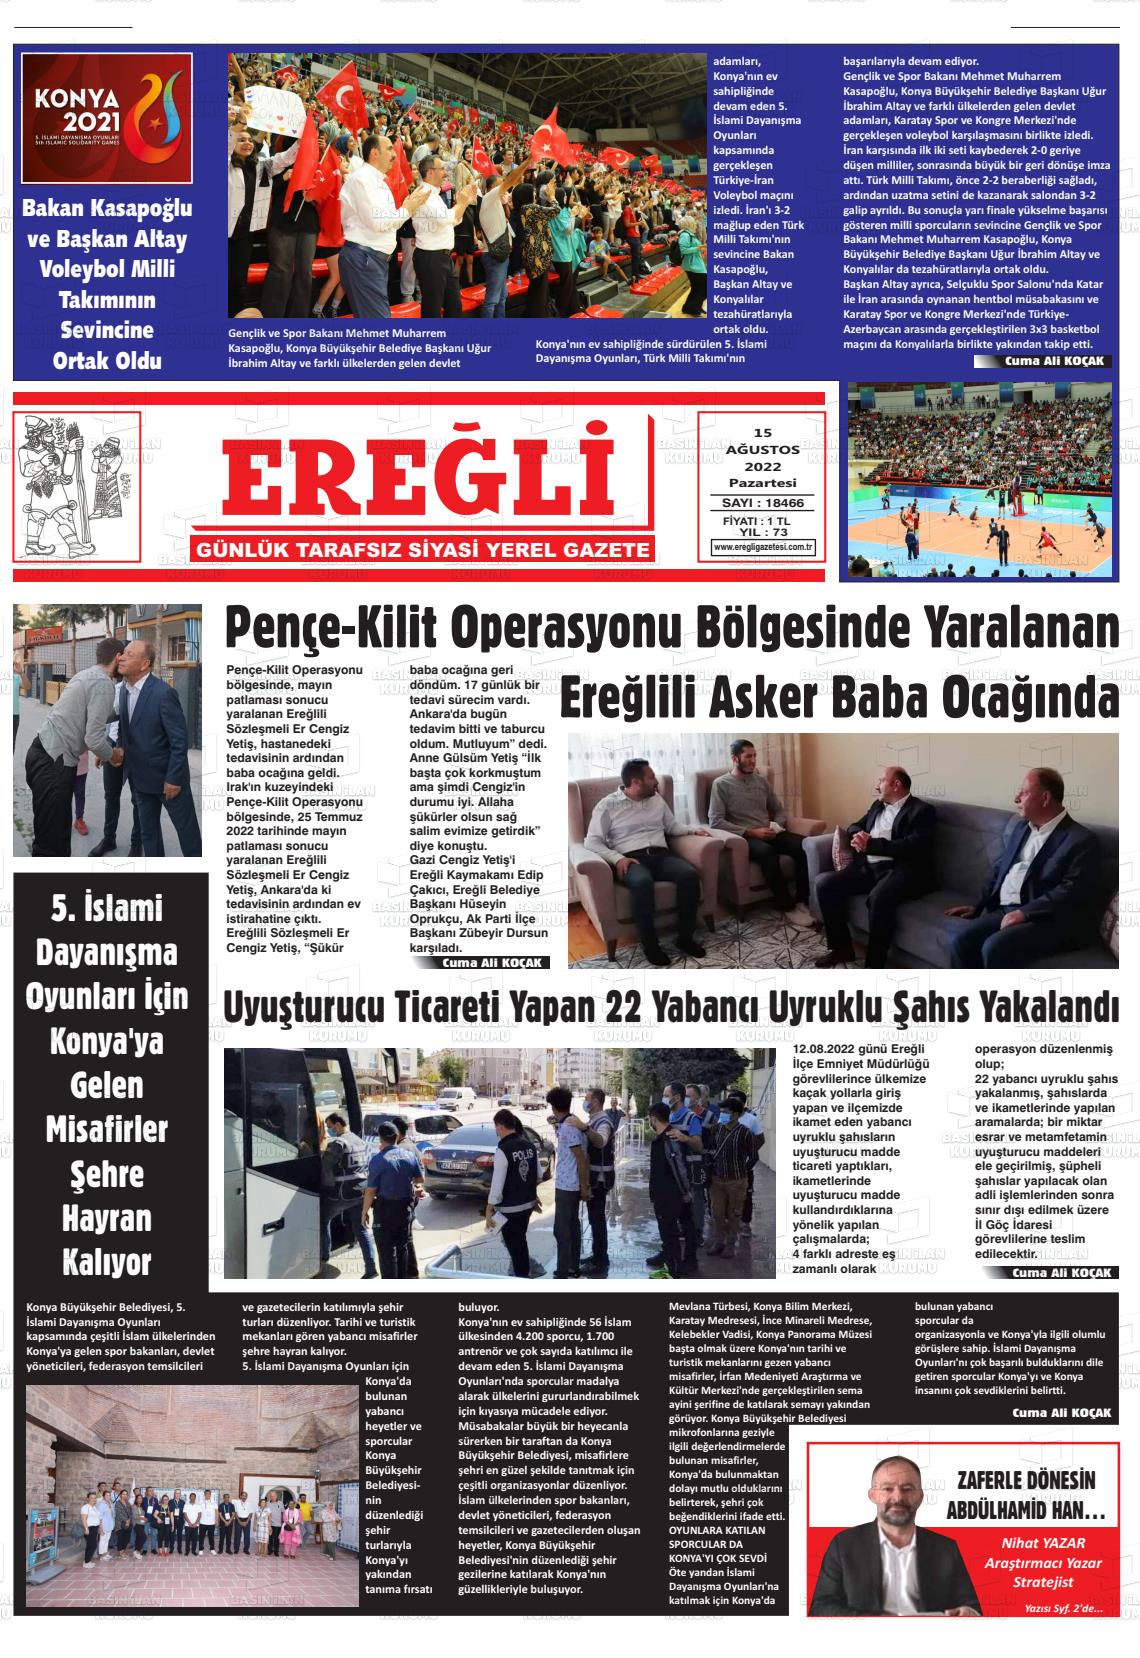 15 Ağustos 2022 Ereğli Gazete Manşeti